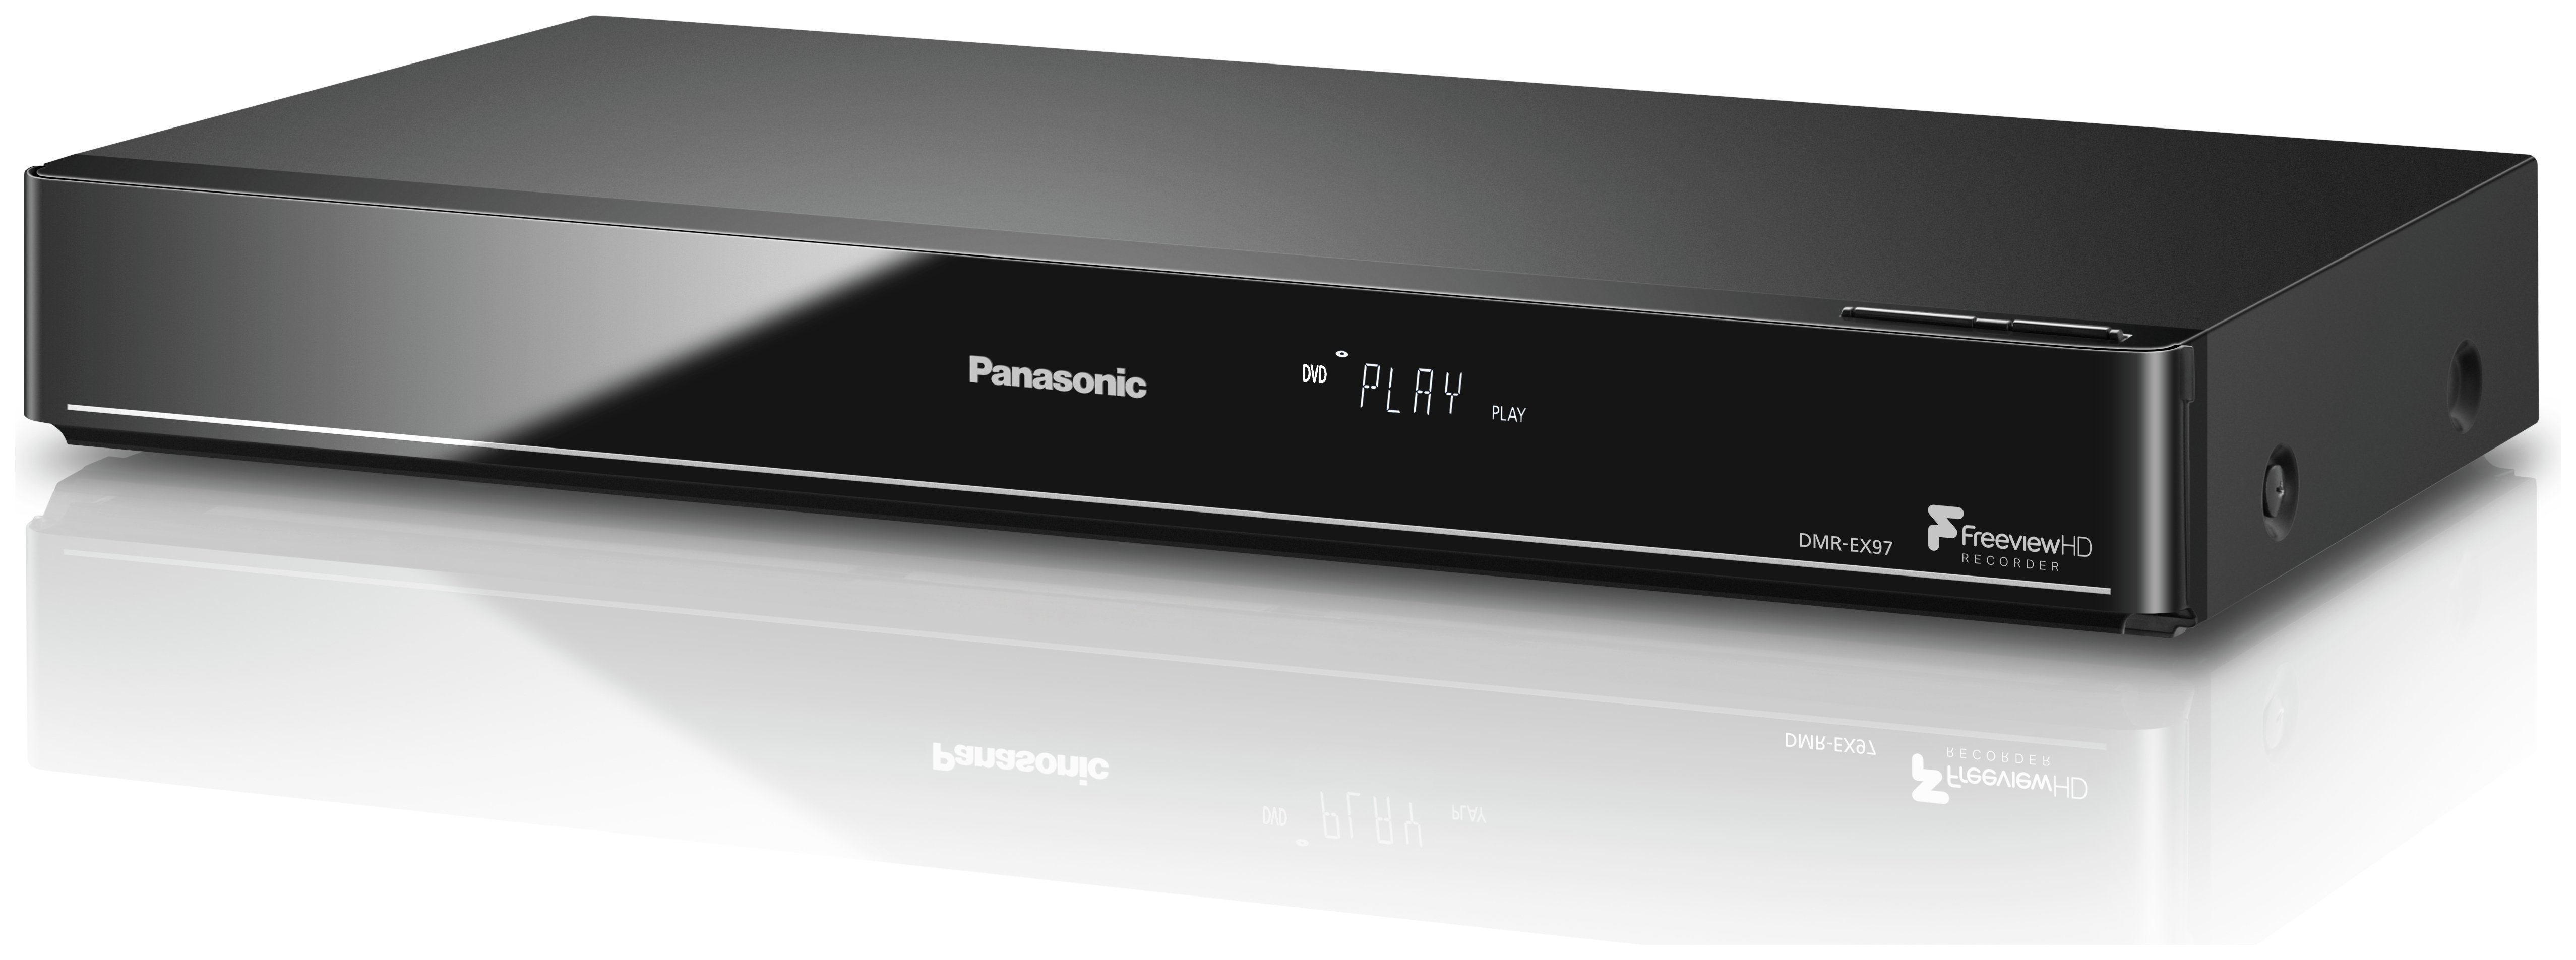 Panasonic EX97EB-K 500GB PVR and DVD Recorder Review